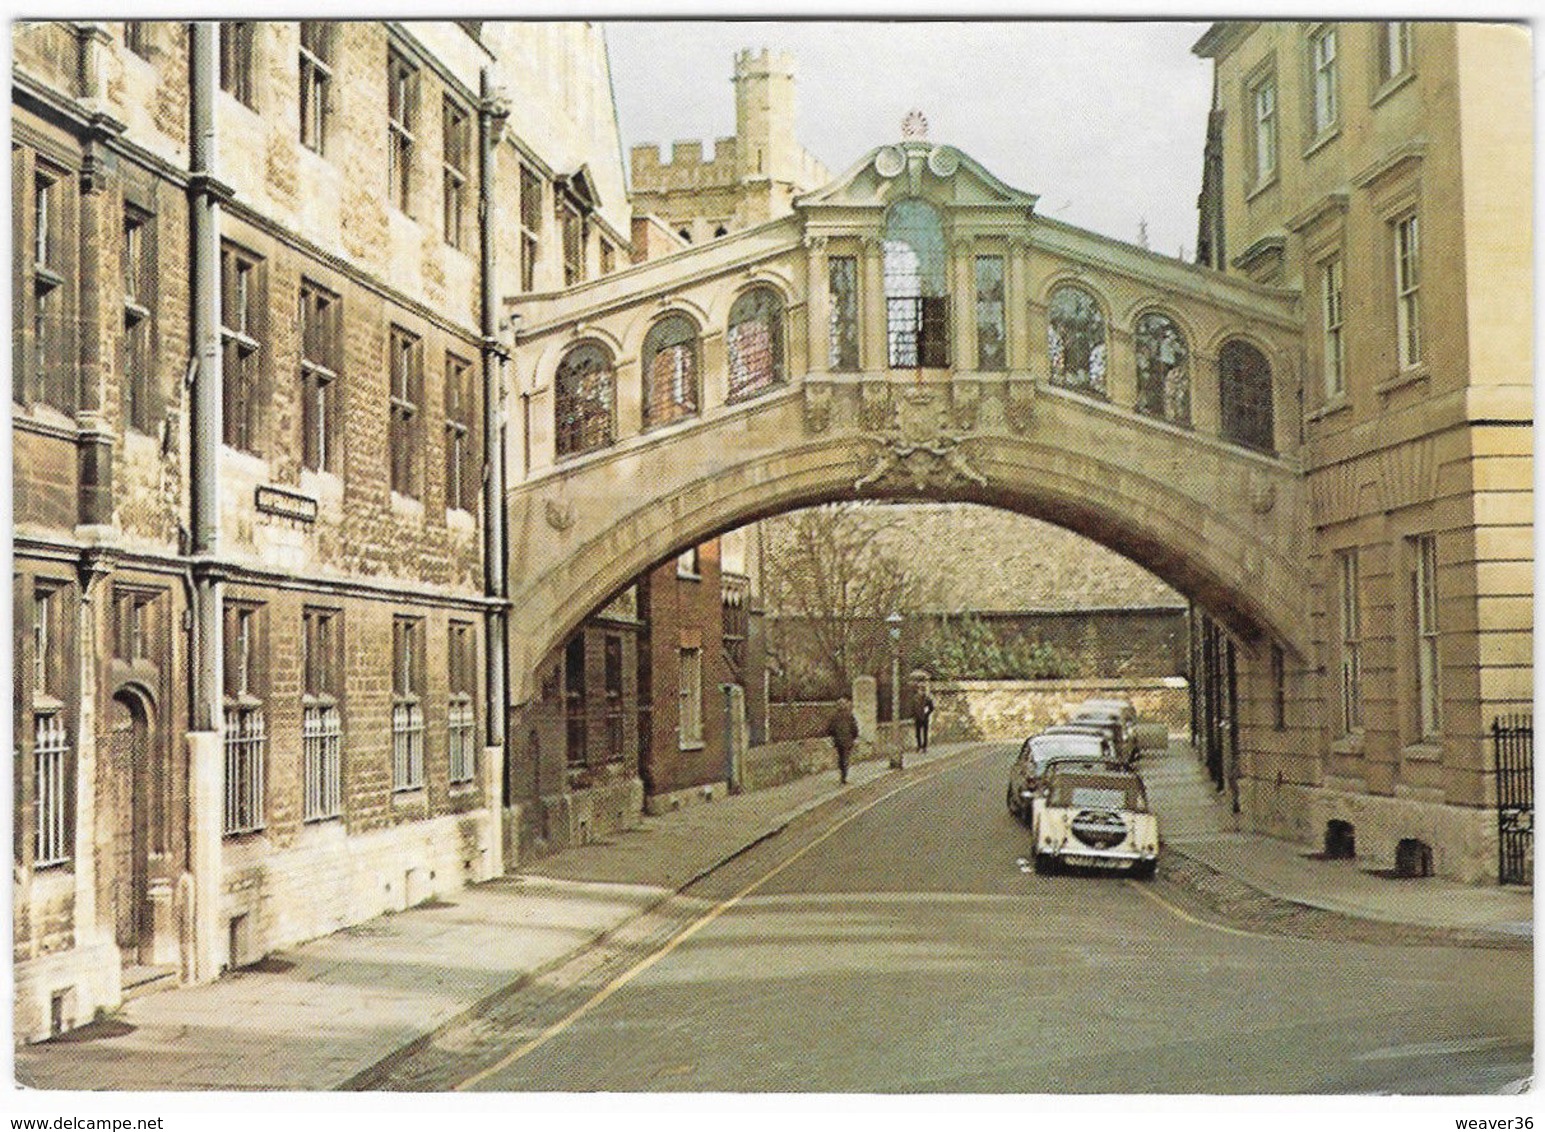 Hertford College, OXFORD Dated 1981 (J Arthur Dixon, POX/23247) [P0090/4/1D] - Oxford